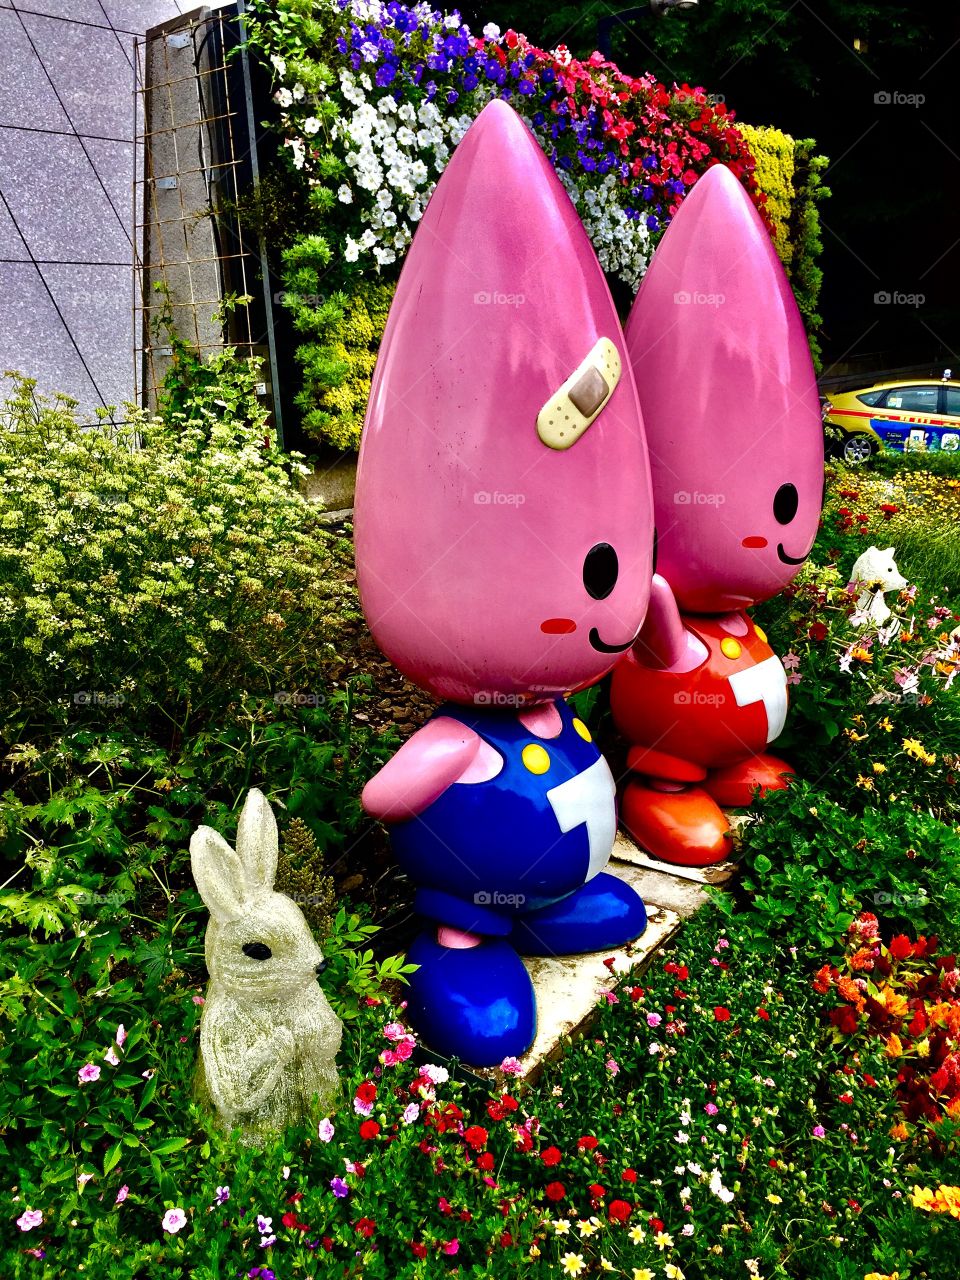 Find the Rabbit. Tokyo Tower. Japan